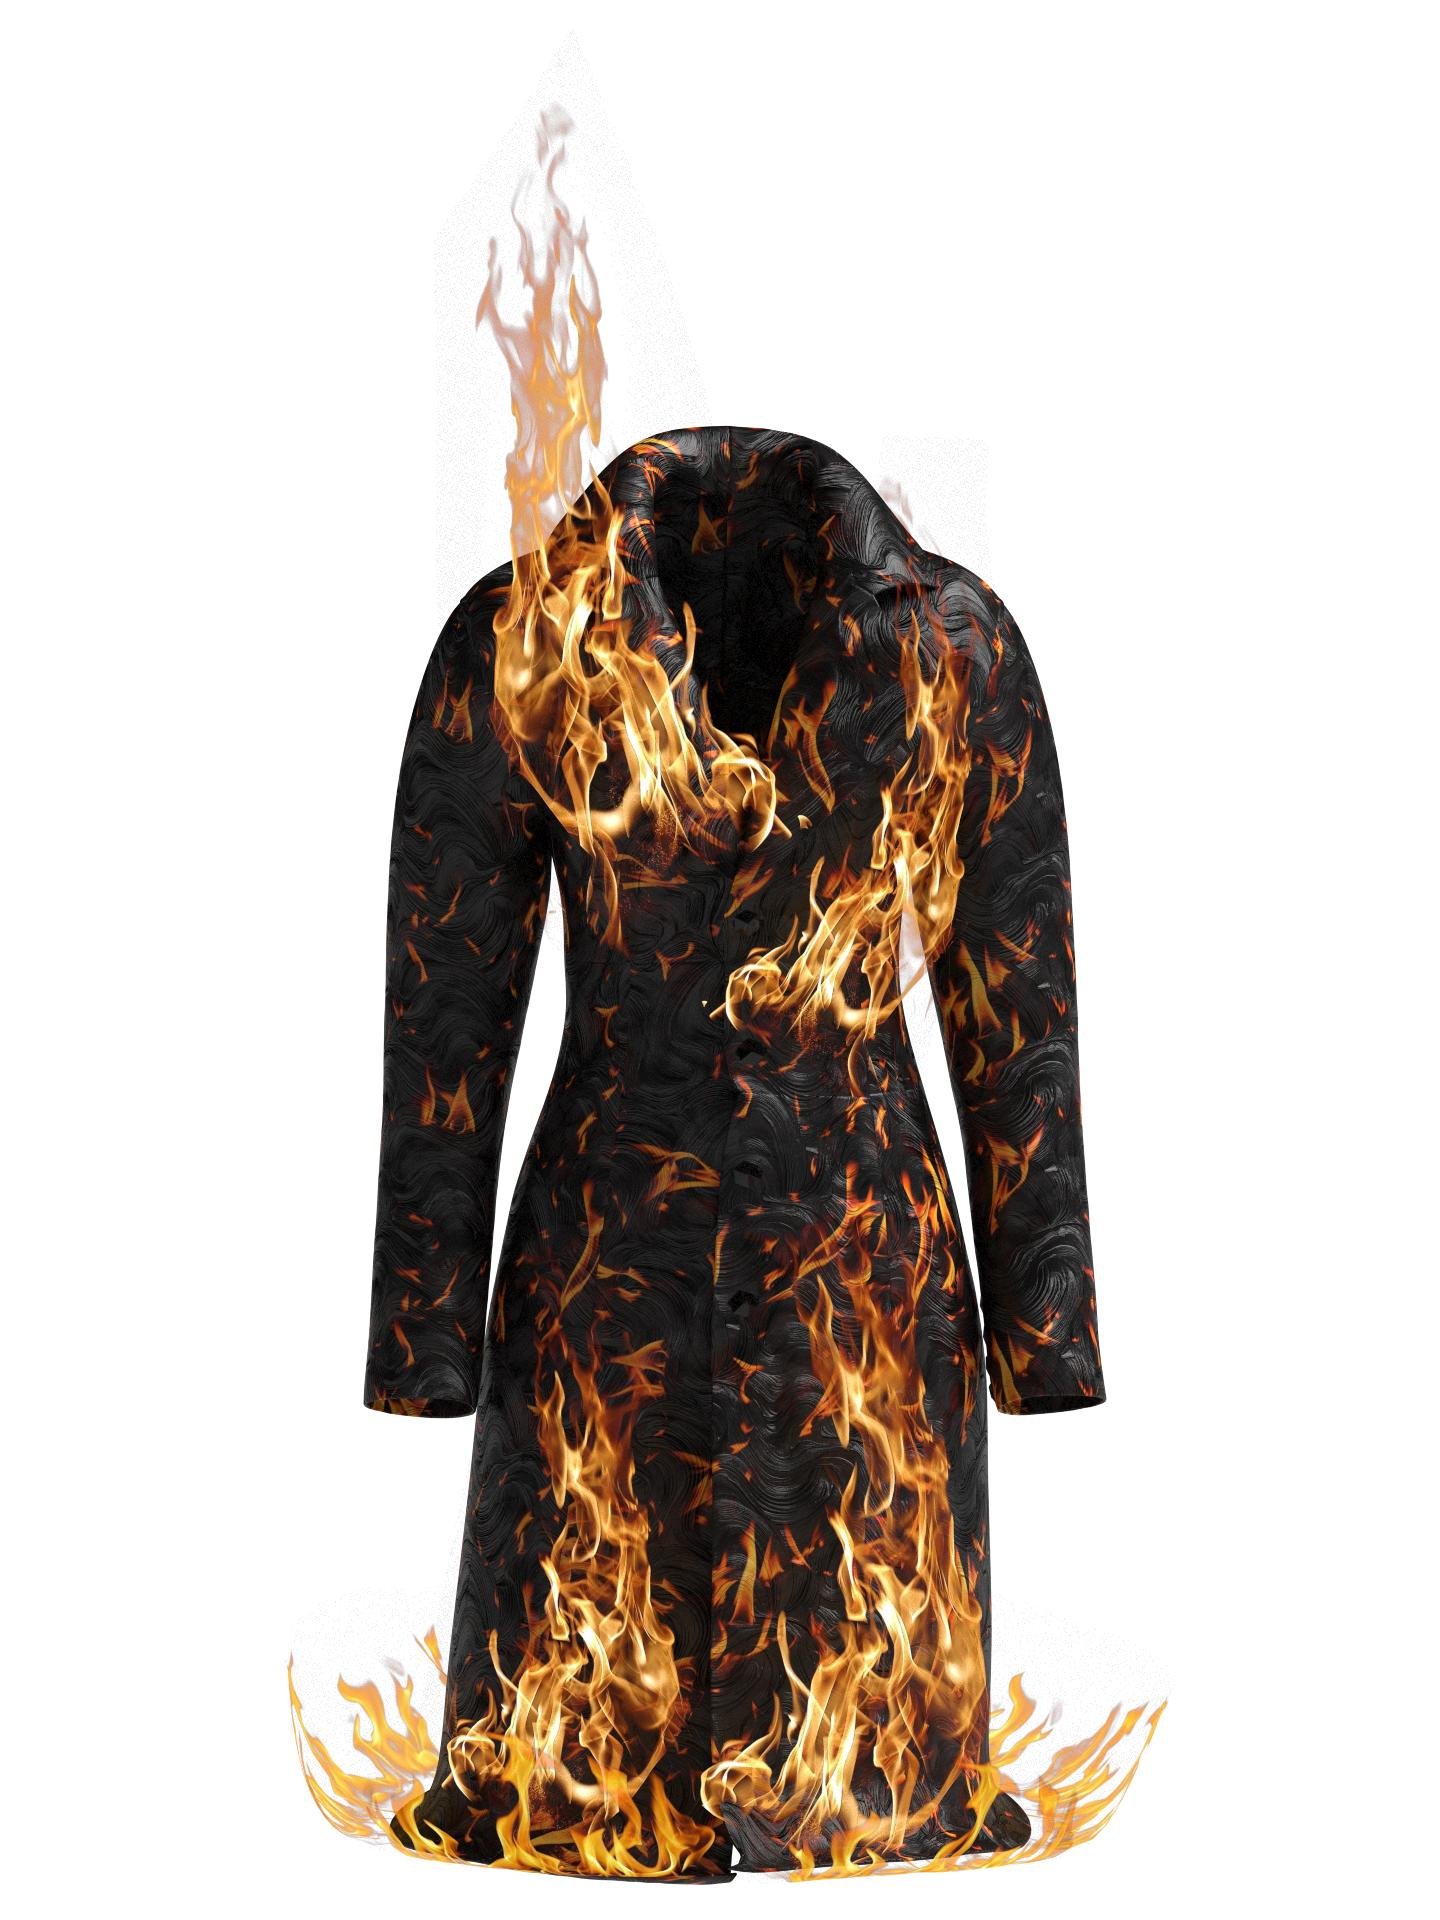 Blaze Aura jacket by SARA HASANPOUR